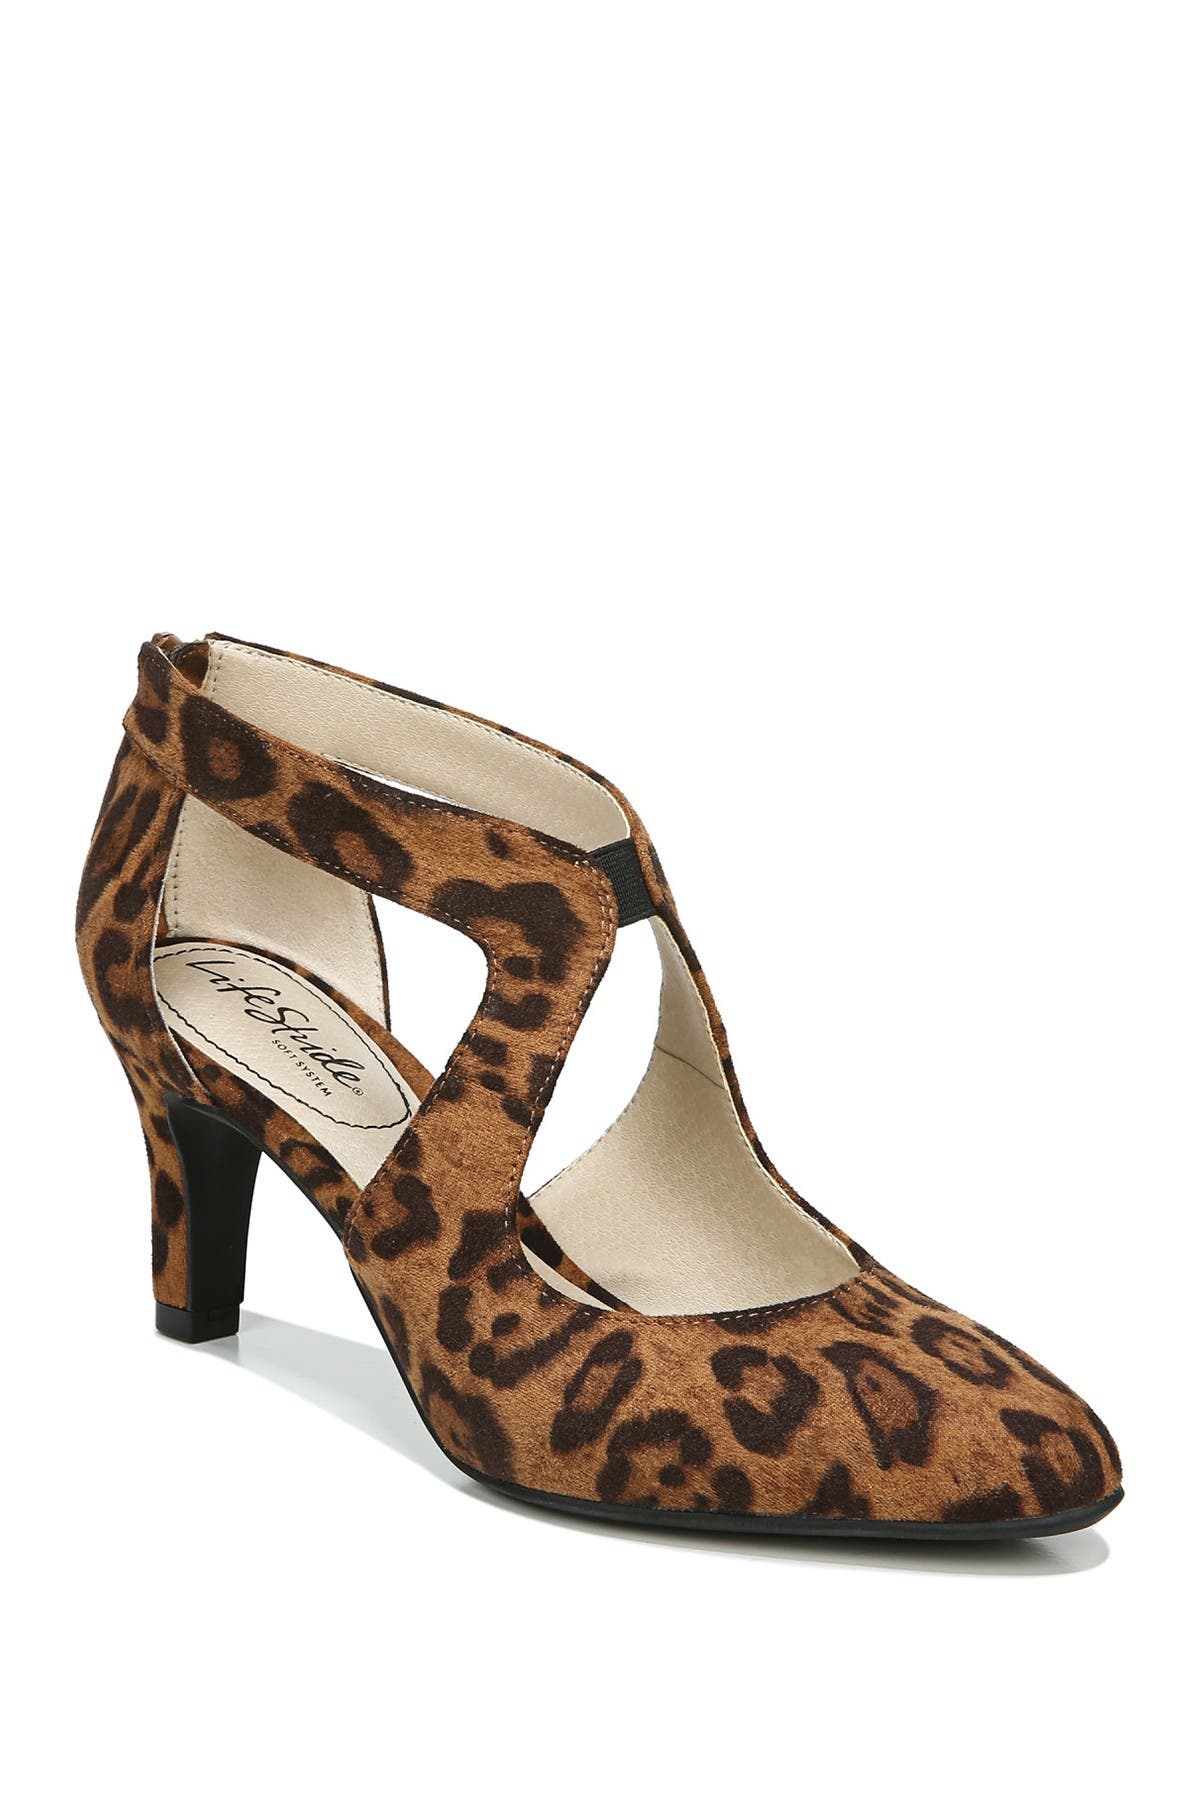 leopard print shoes wide width